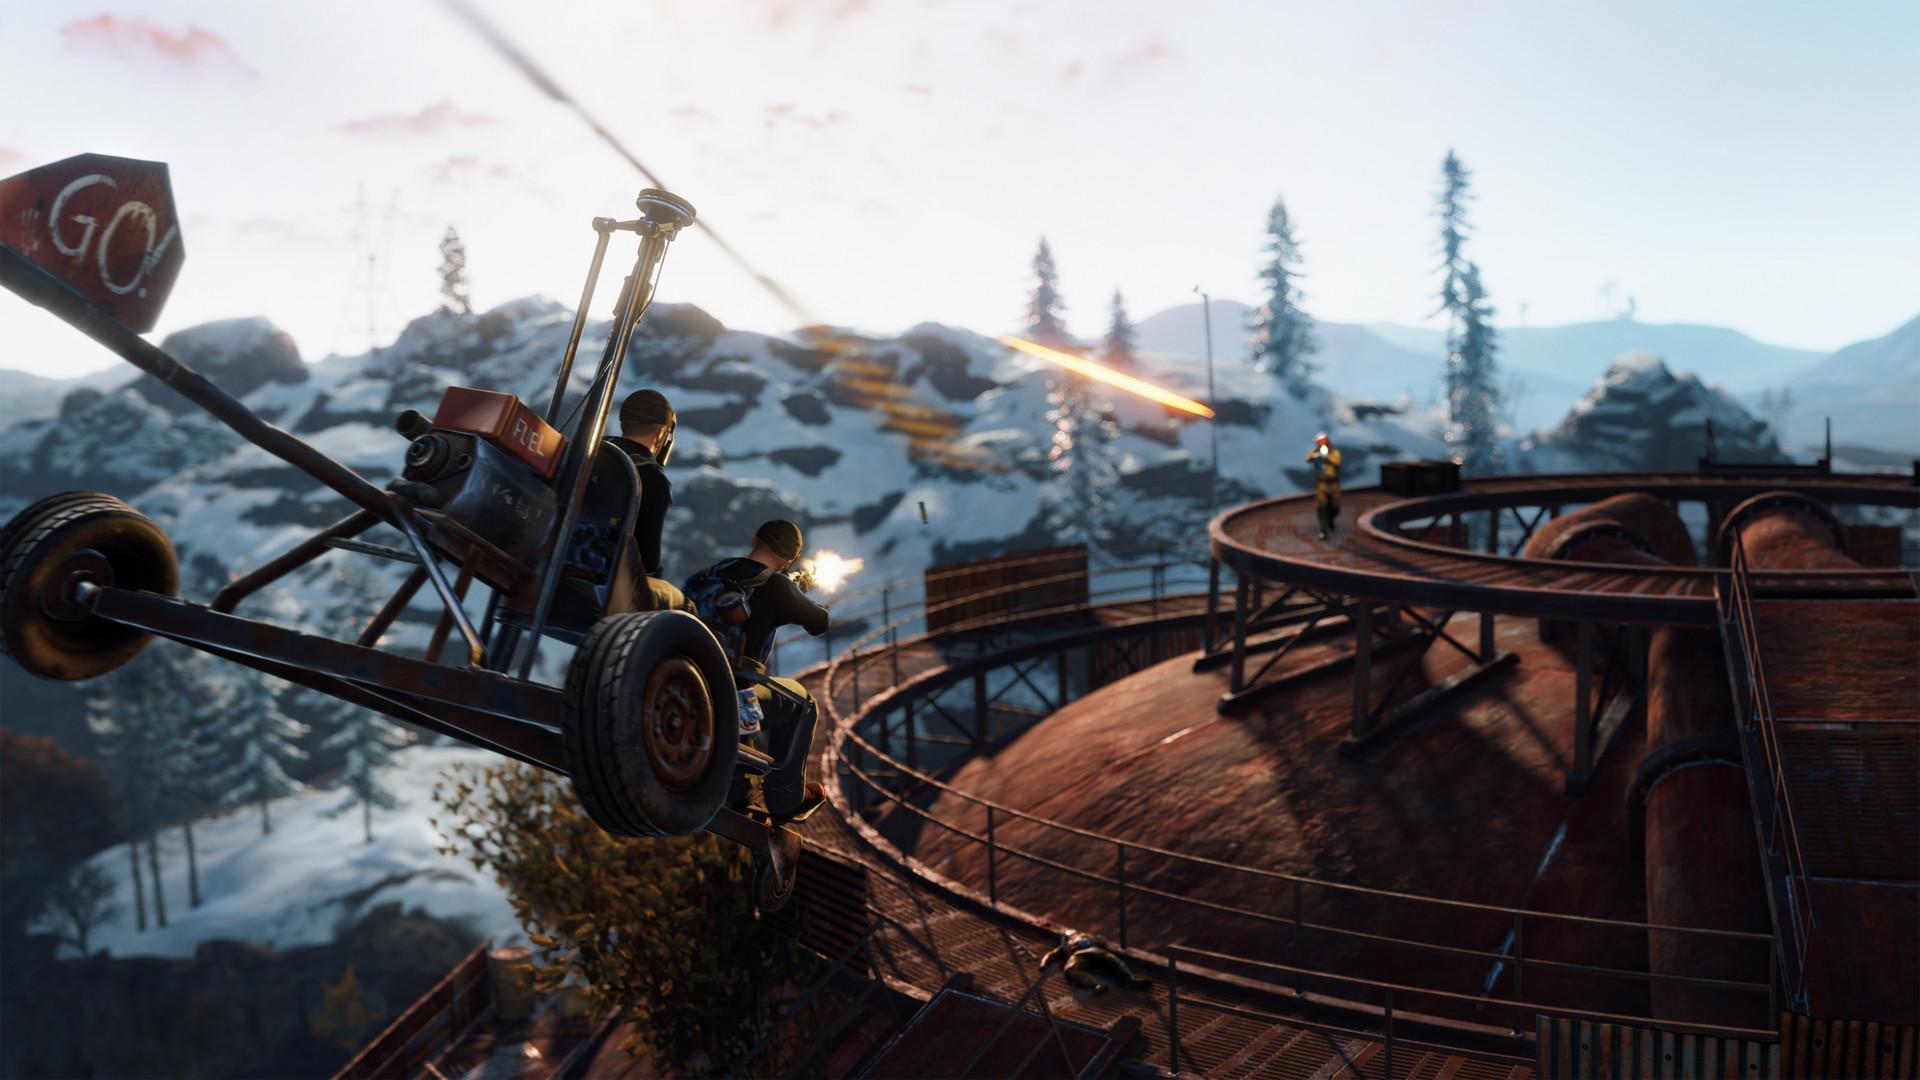 Screenshot №8 from game Rust